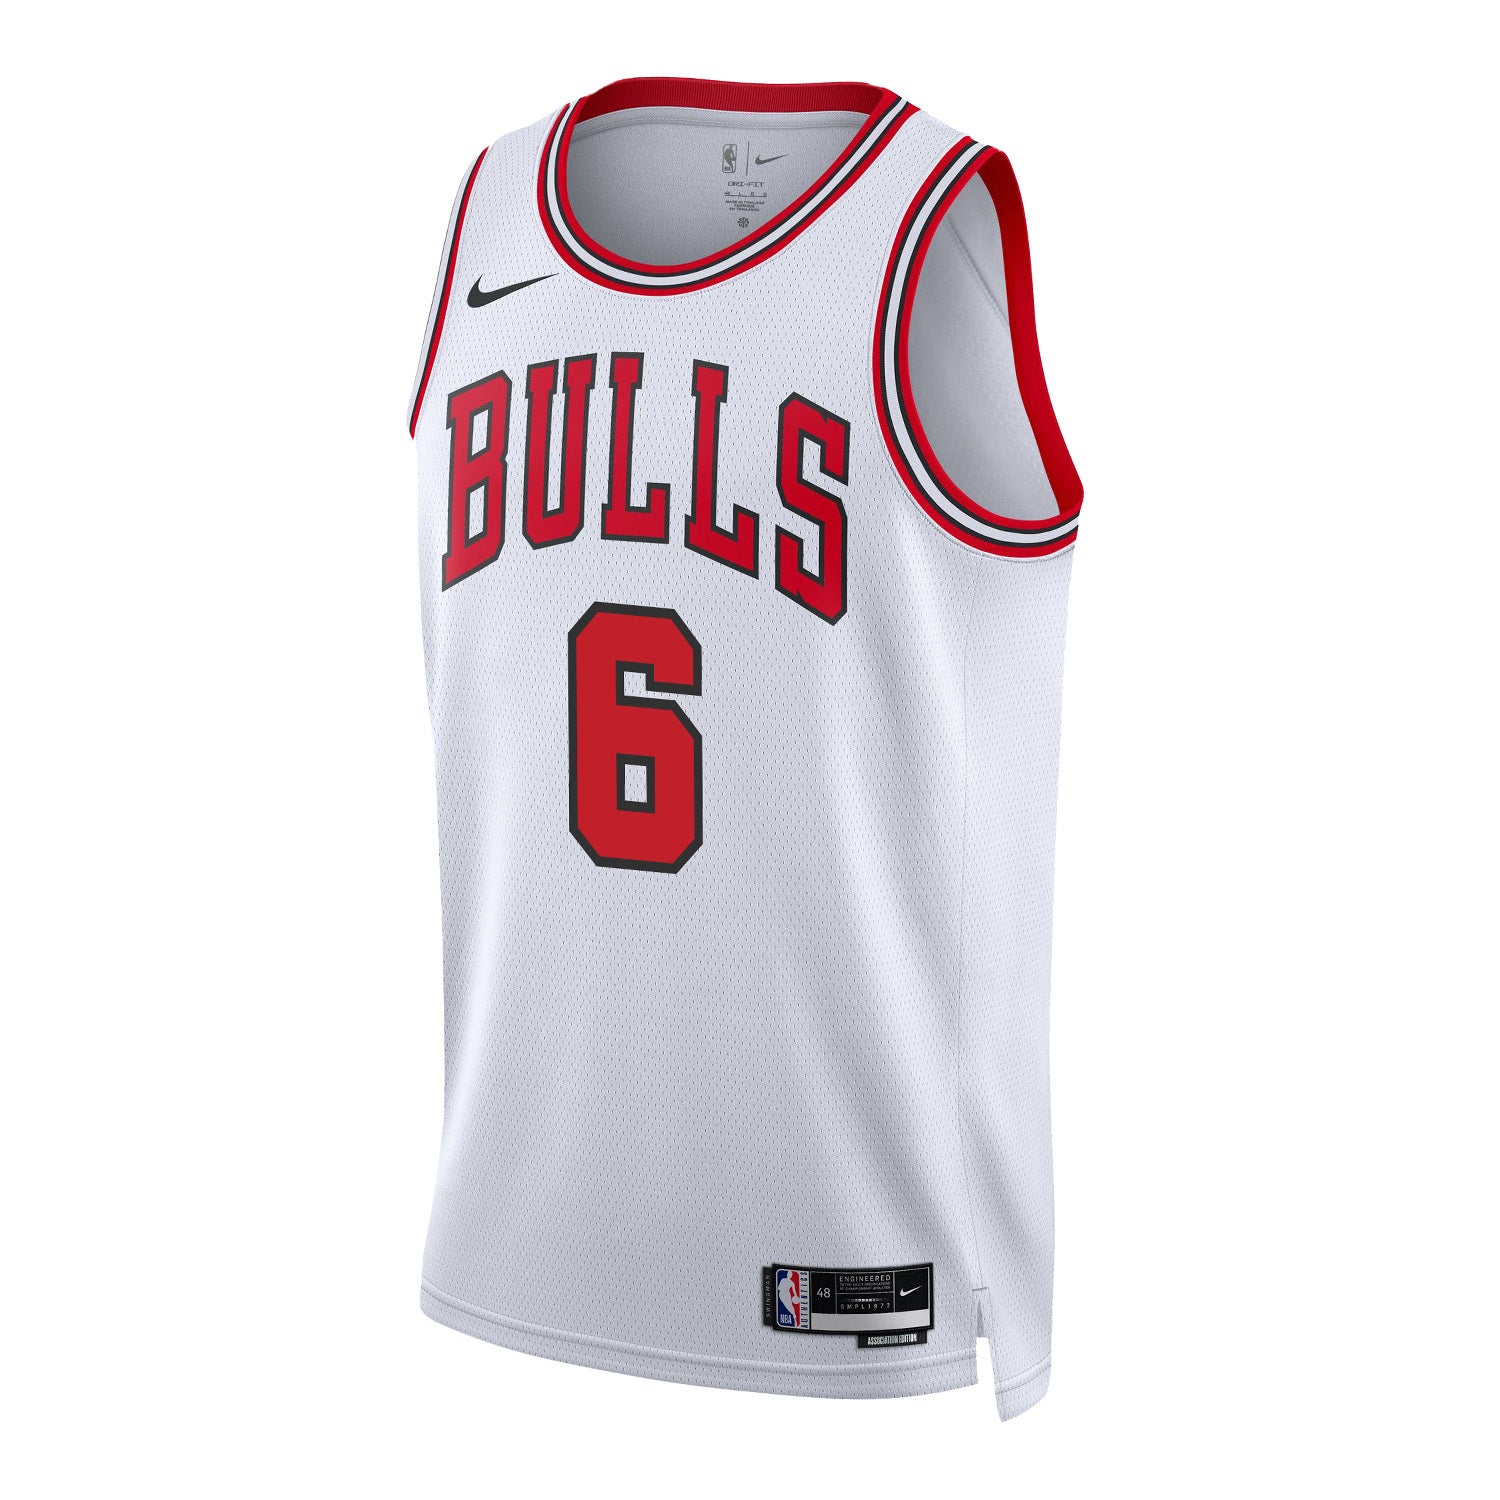 bulls 6 jersey